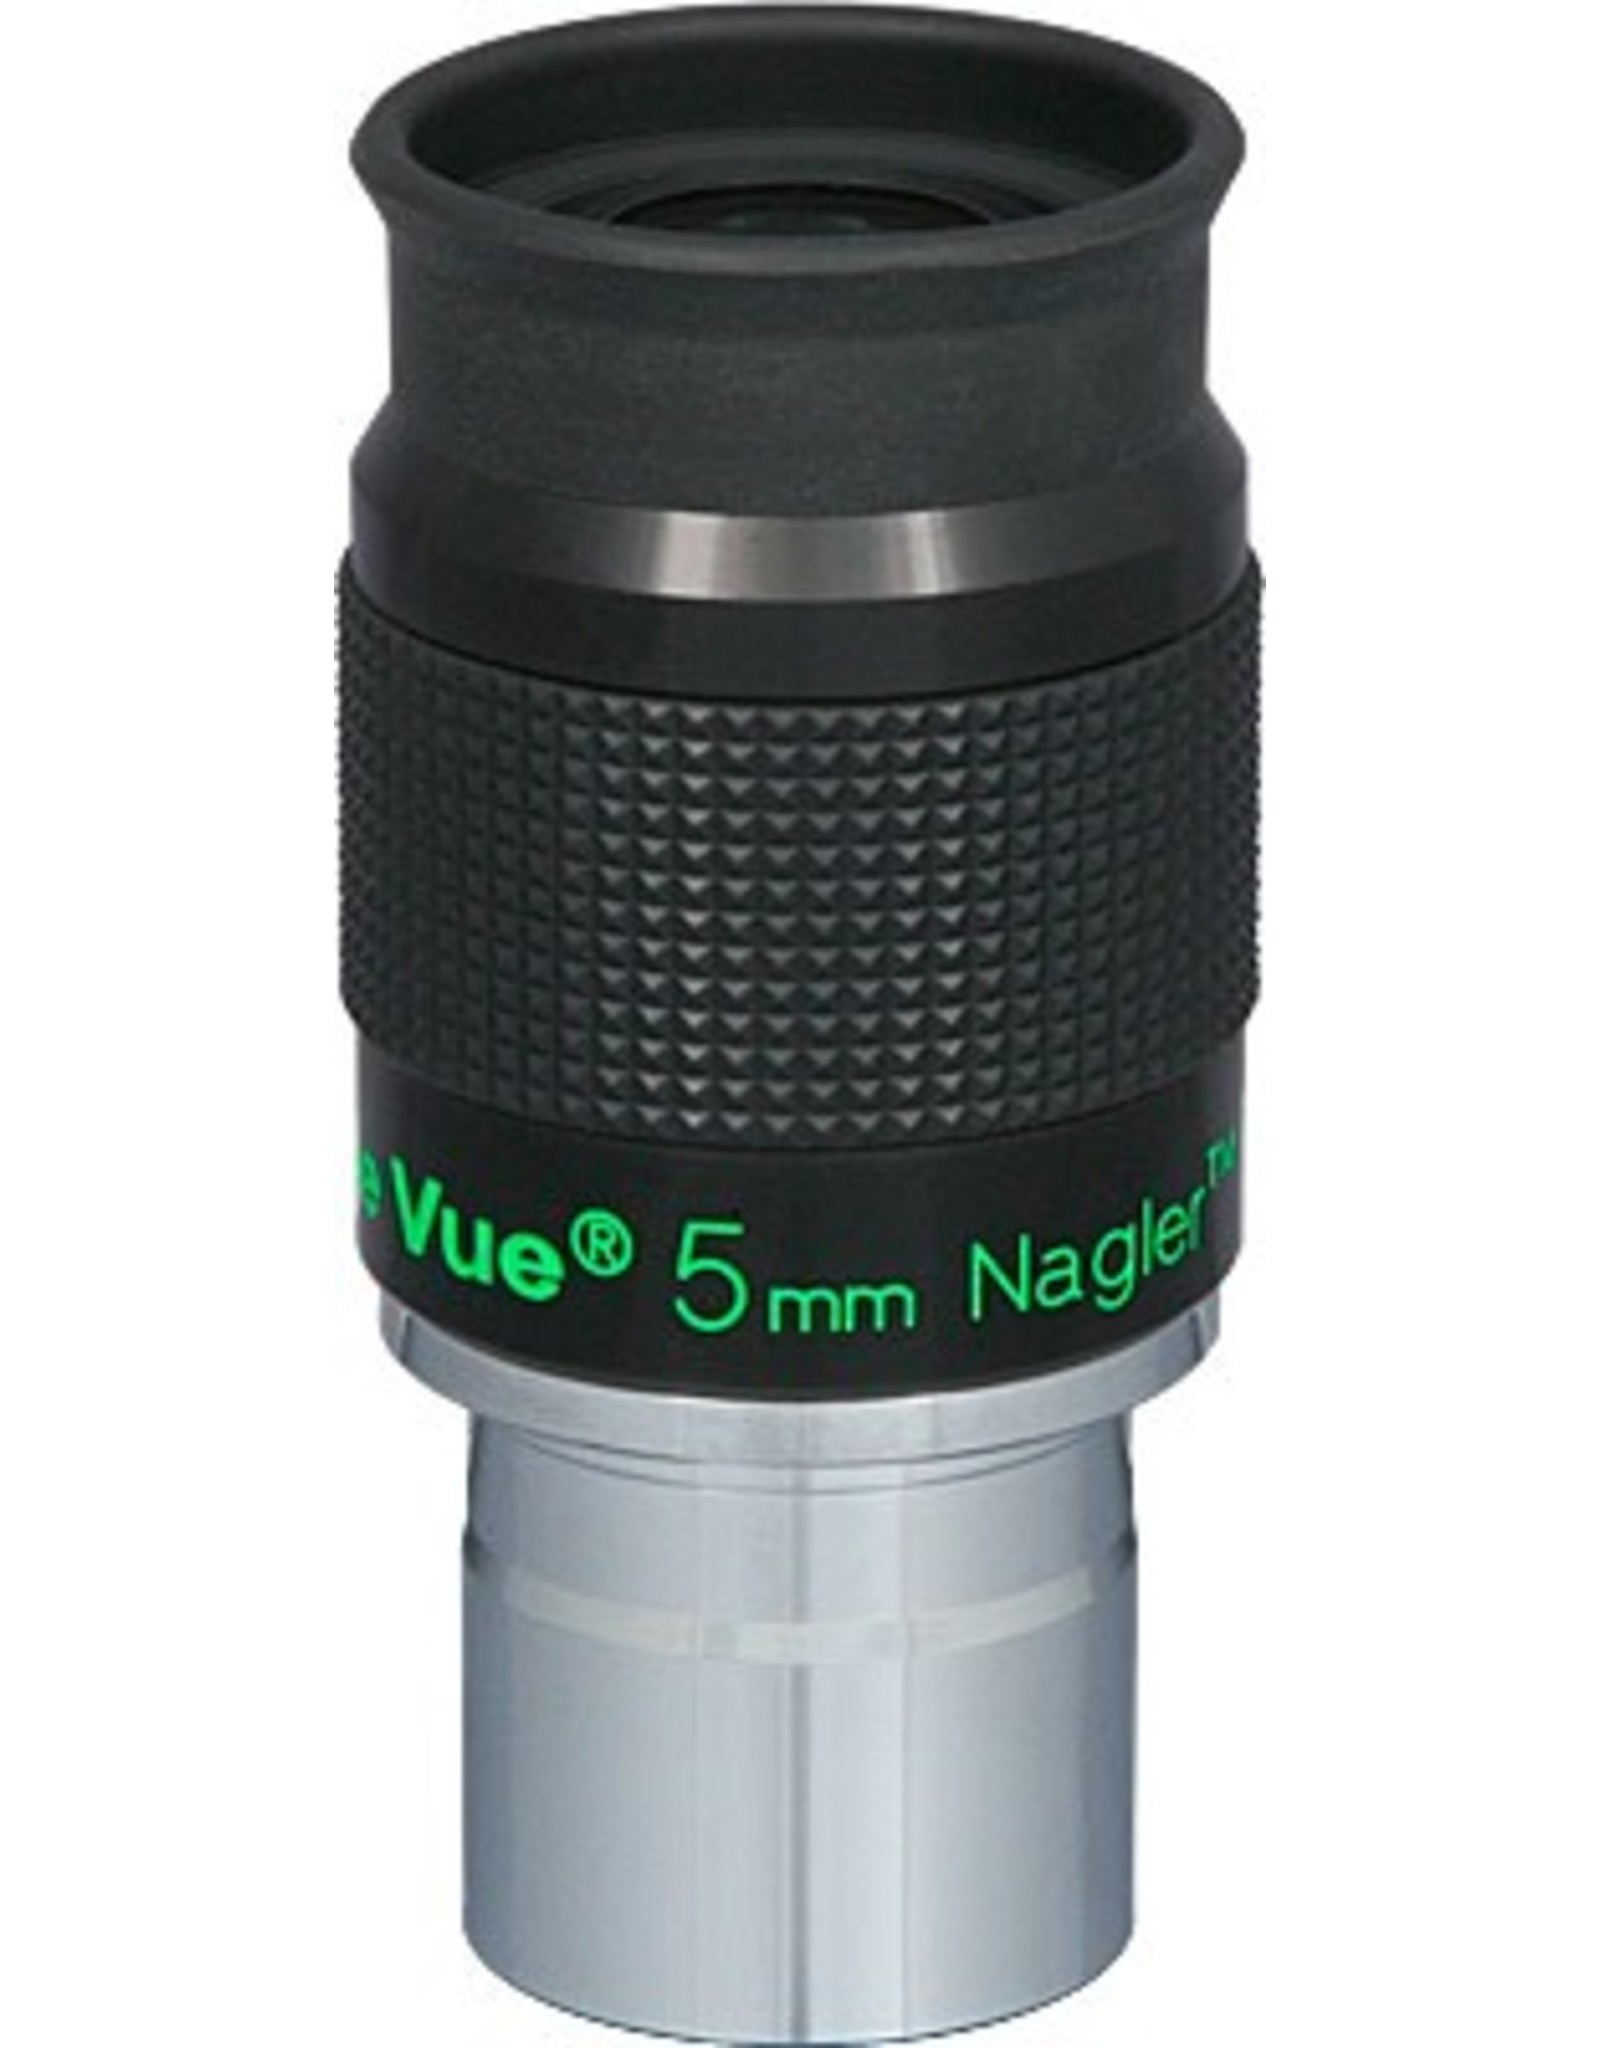 Tele Vue 5mm Nagler Type 6 Eyepiece - 1.25